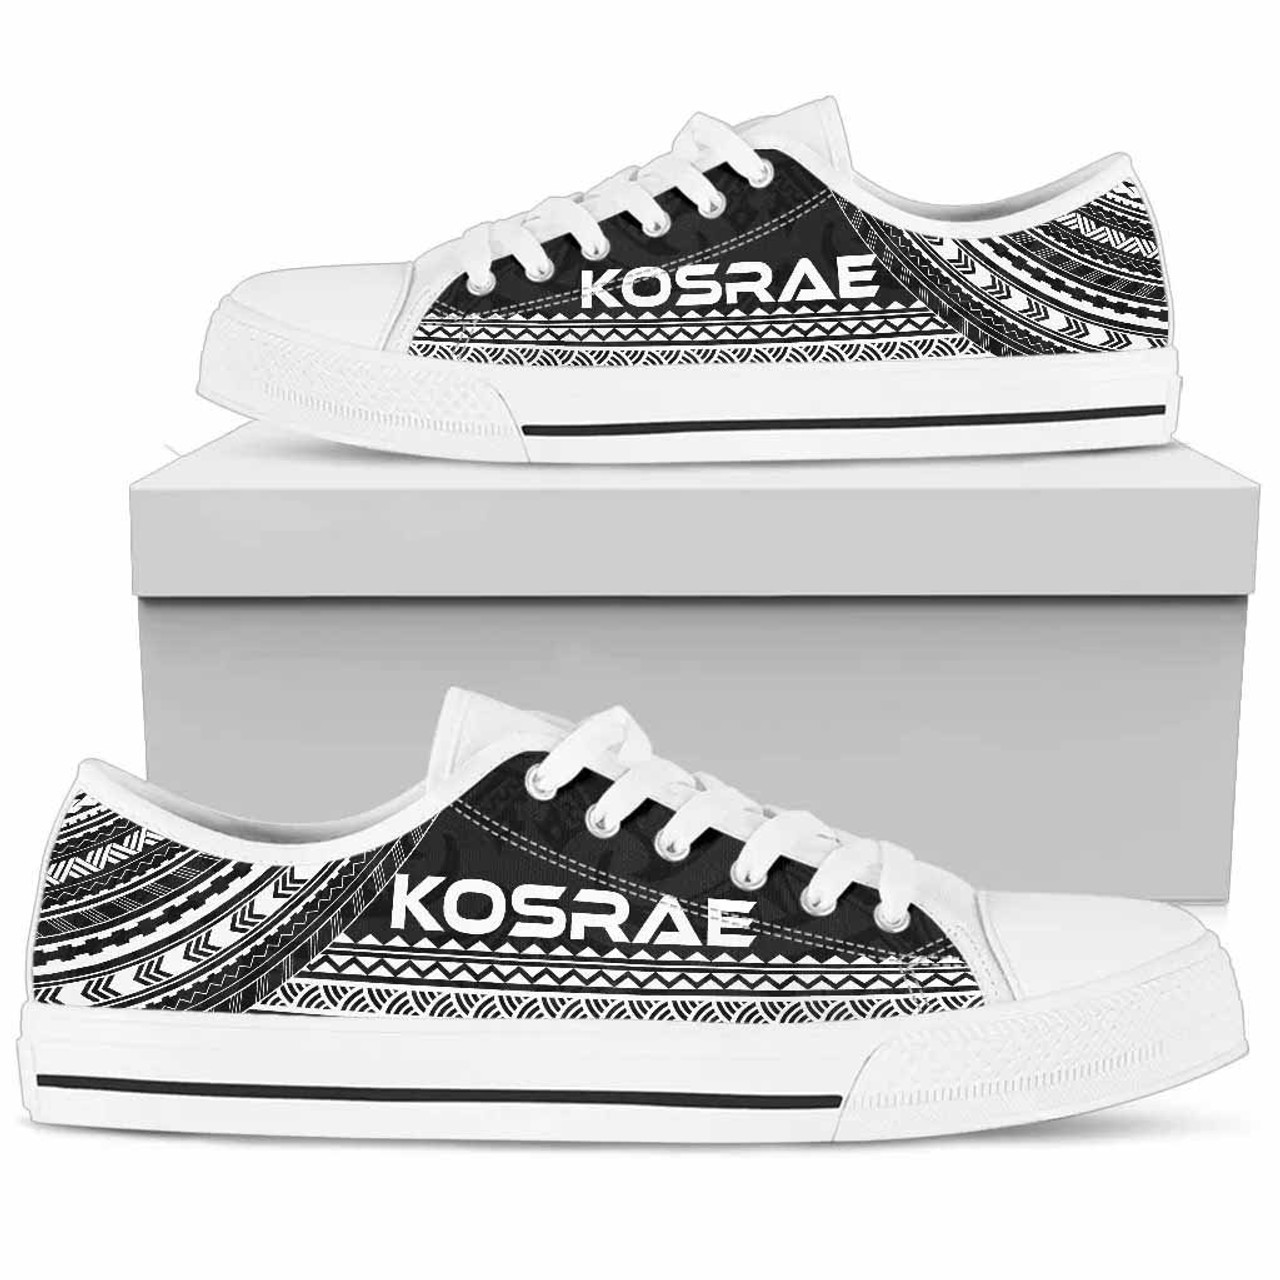 Kosrae Low Top Shoes - Polynesian Black Chief Version 3